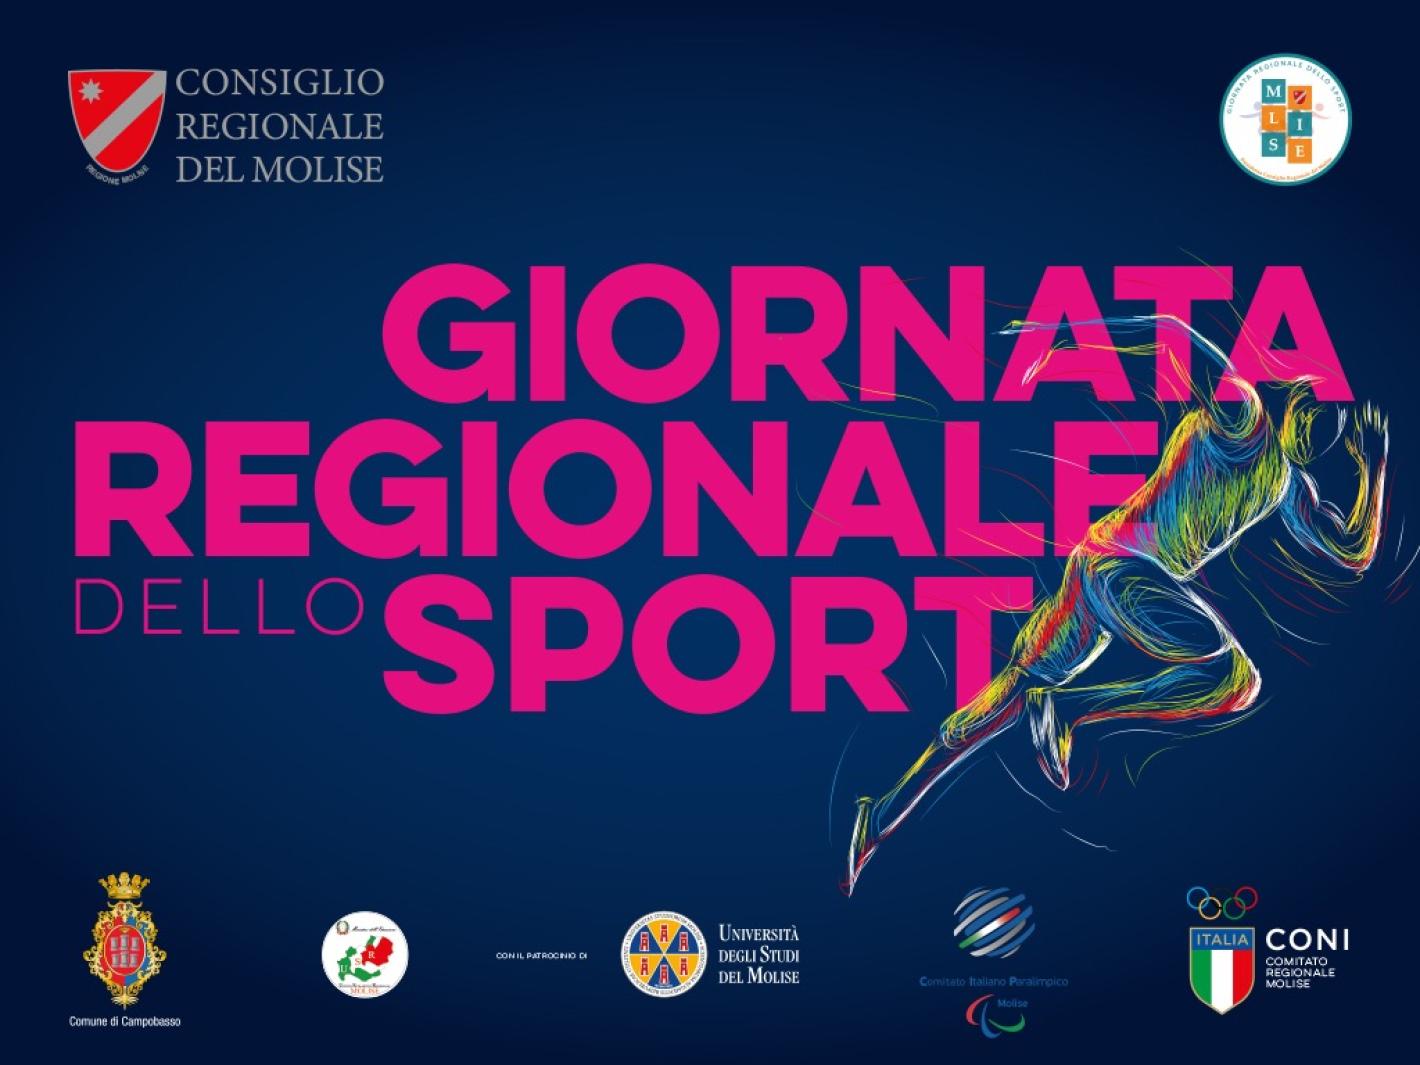 images/medium/Giornata_regionale_dello_Sport_MOLISE.jpg